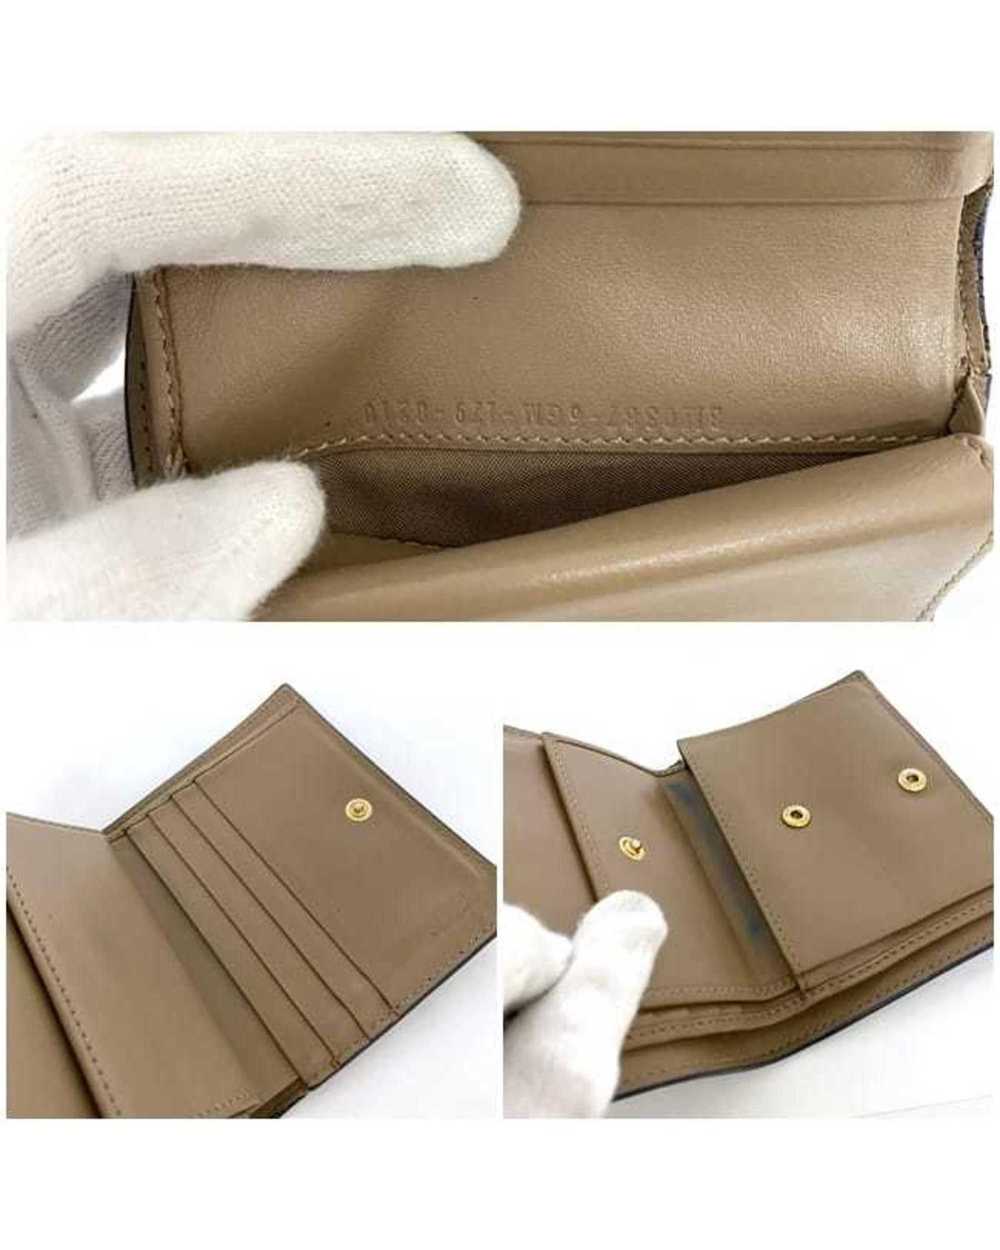 Fendi Burgundy Leather Compact Wallet - image 10